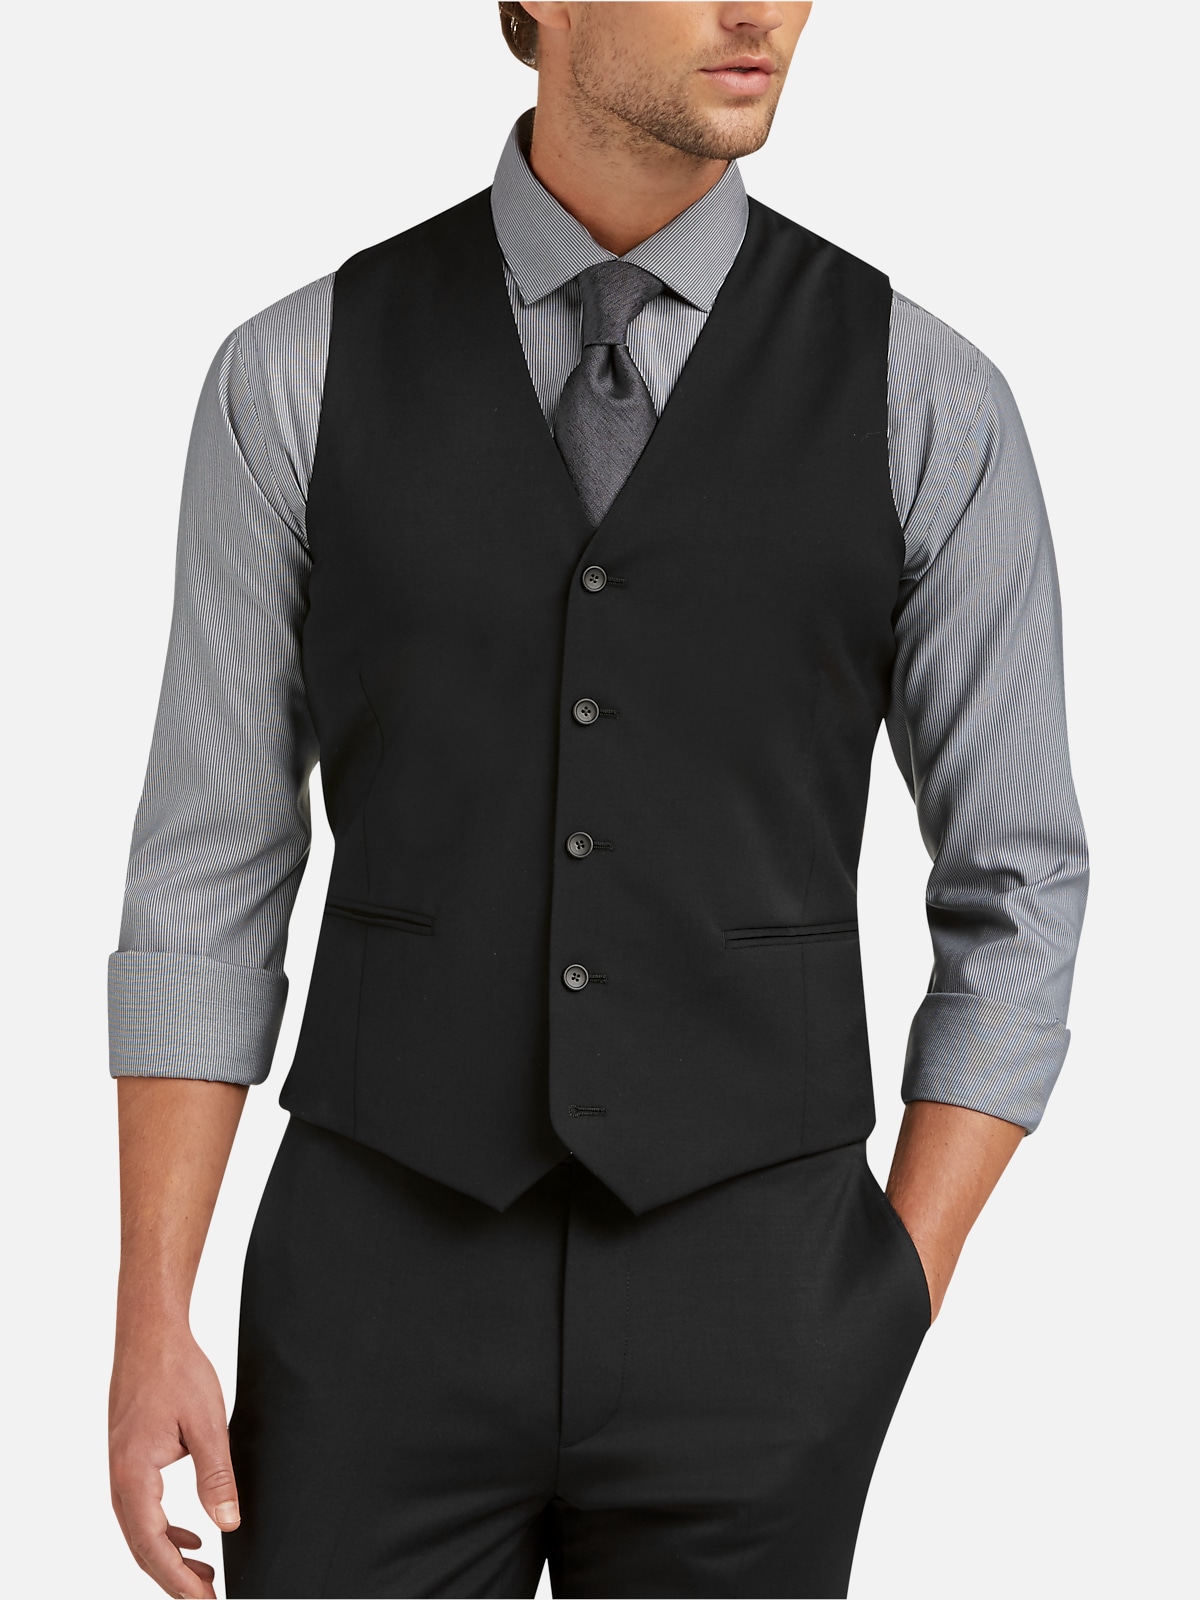 Awearness Kenneth Cole AWEAR-TECH Men's Extreme Slim Fit Suit Separates Vest at Men's Wearhouse, Black - Size: XL